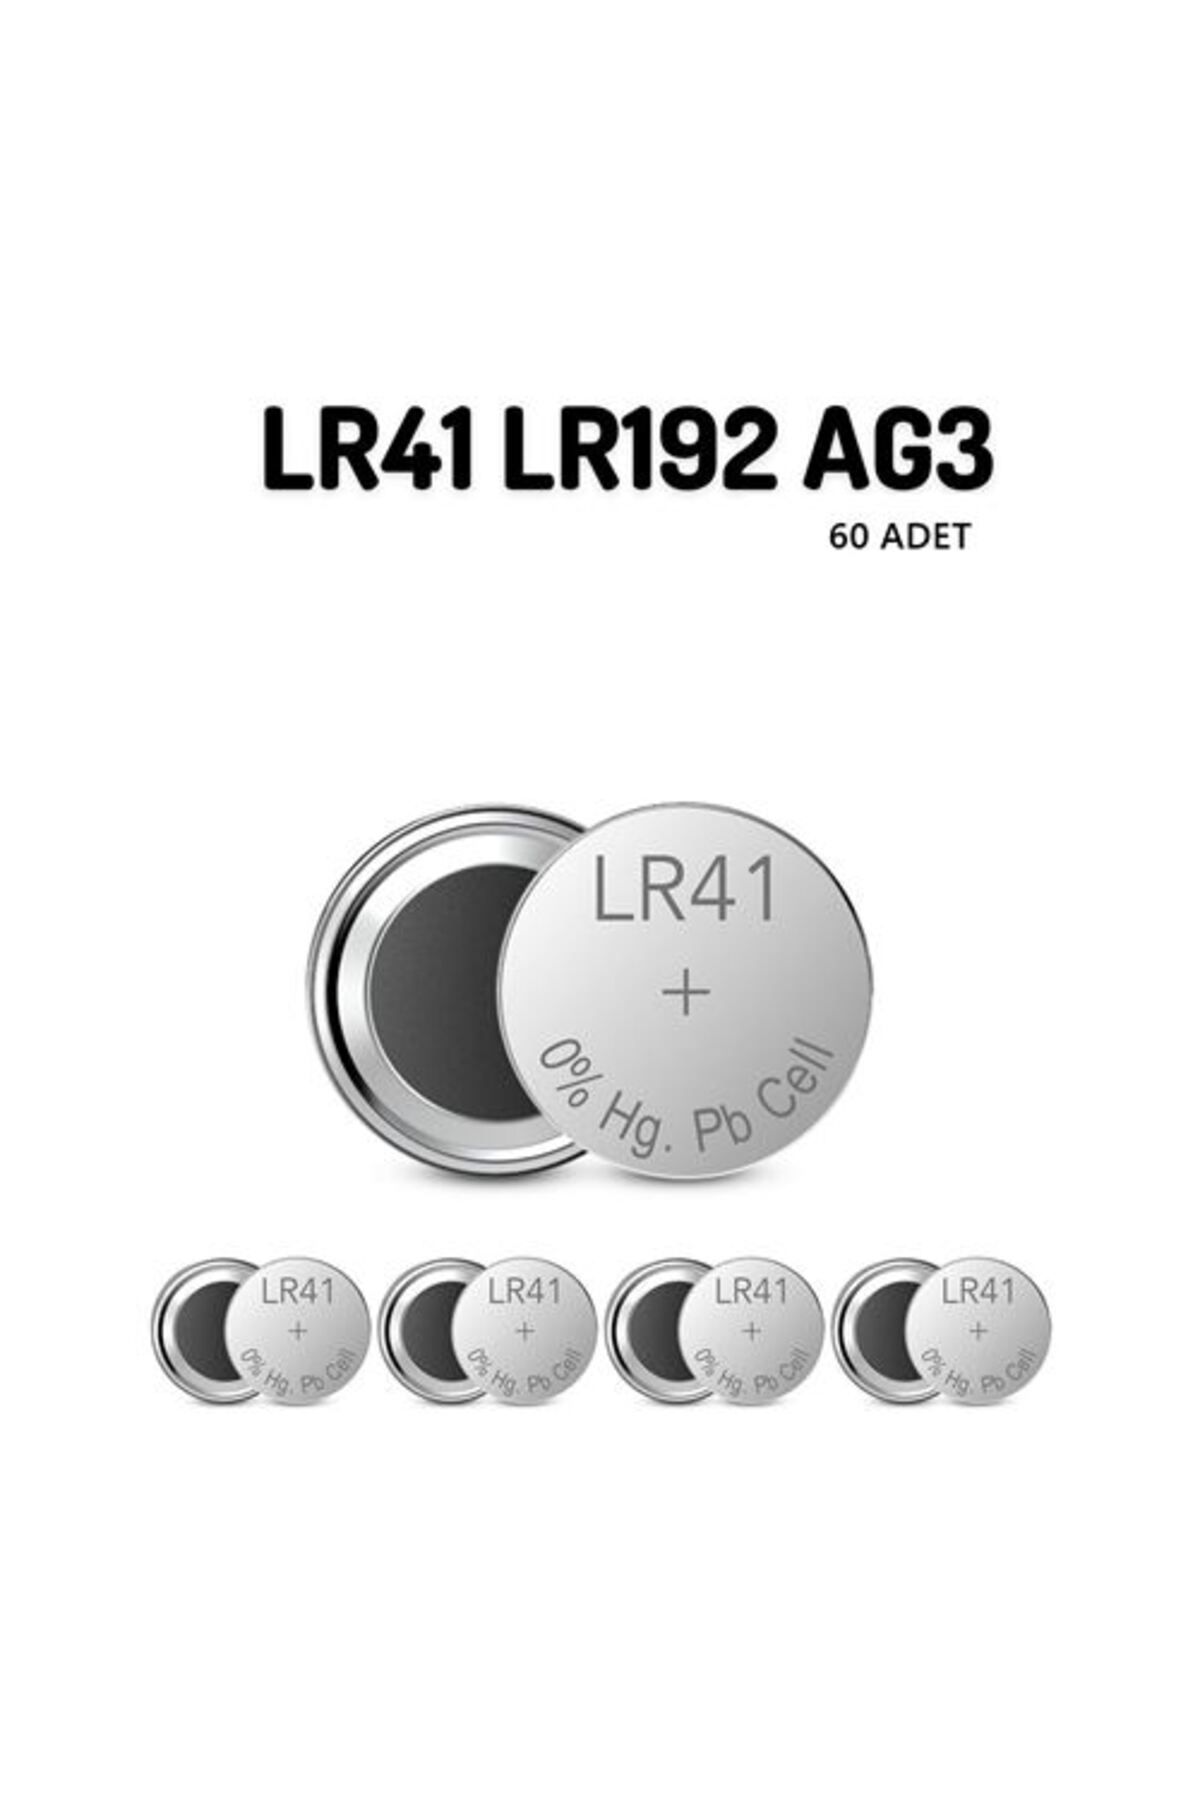 Store 50+10 ADET LR41 LR192 AG3 1.55V  Alkaline Pil